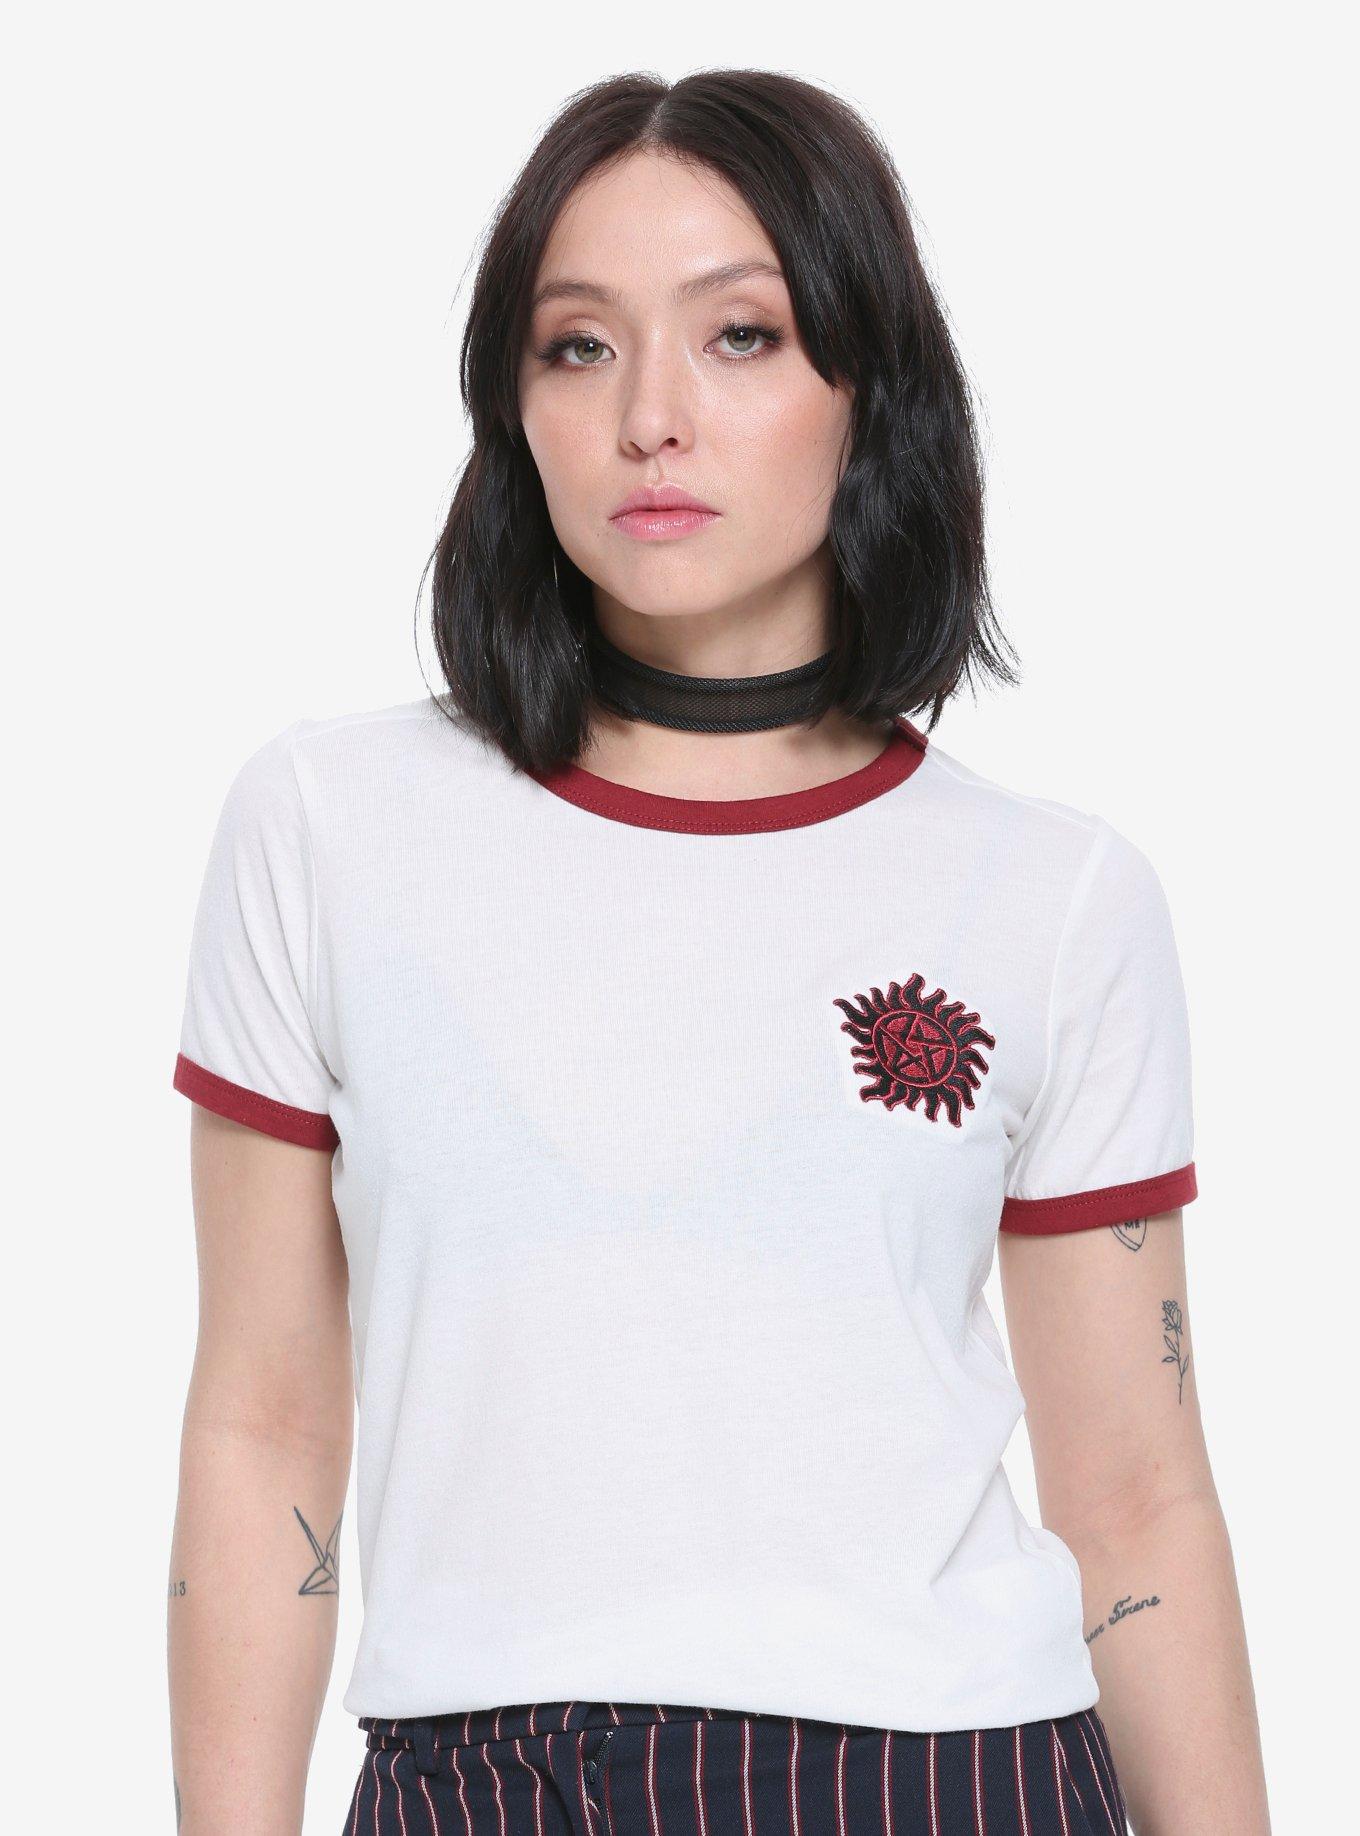 Supernatural Anti-Possession Symbol Embroidered Girls Ringer T-Shirt, BURGUNDY, hi-res